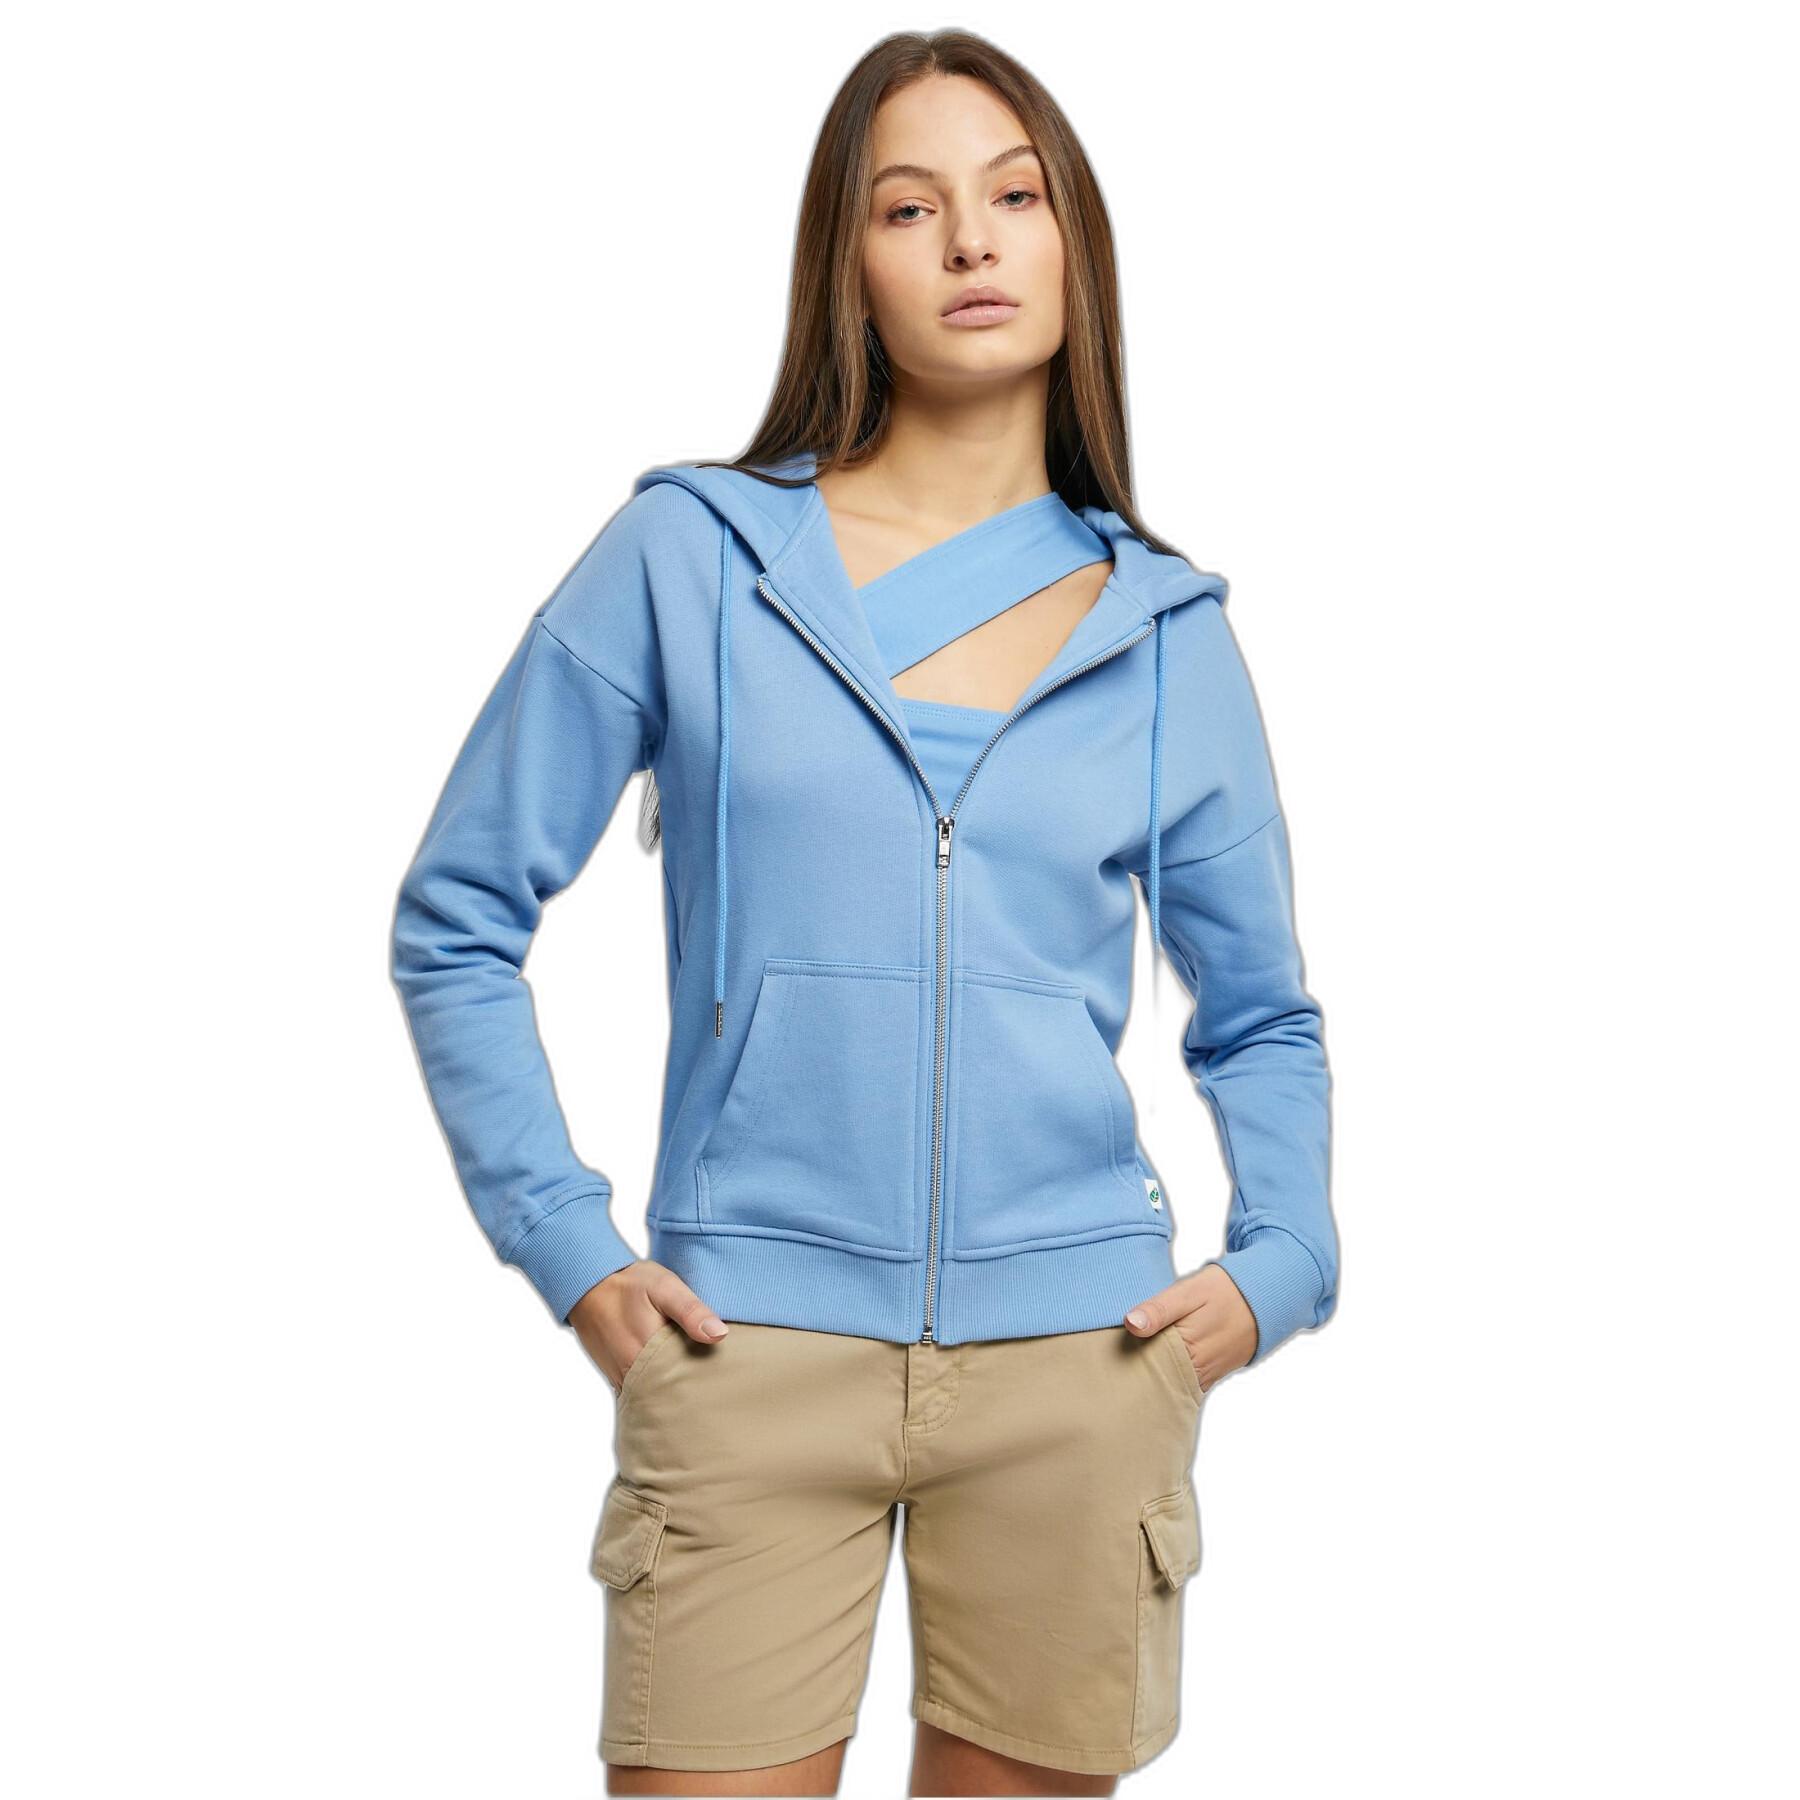 Sweat zipped hoodie for women Urban Classics Organic Terry